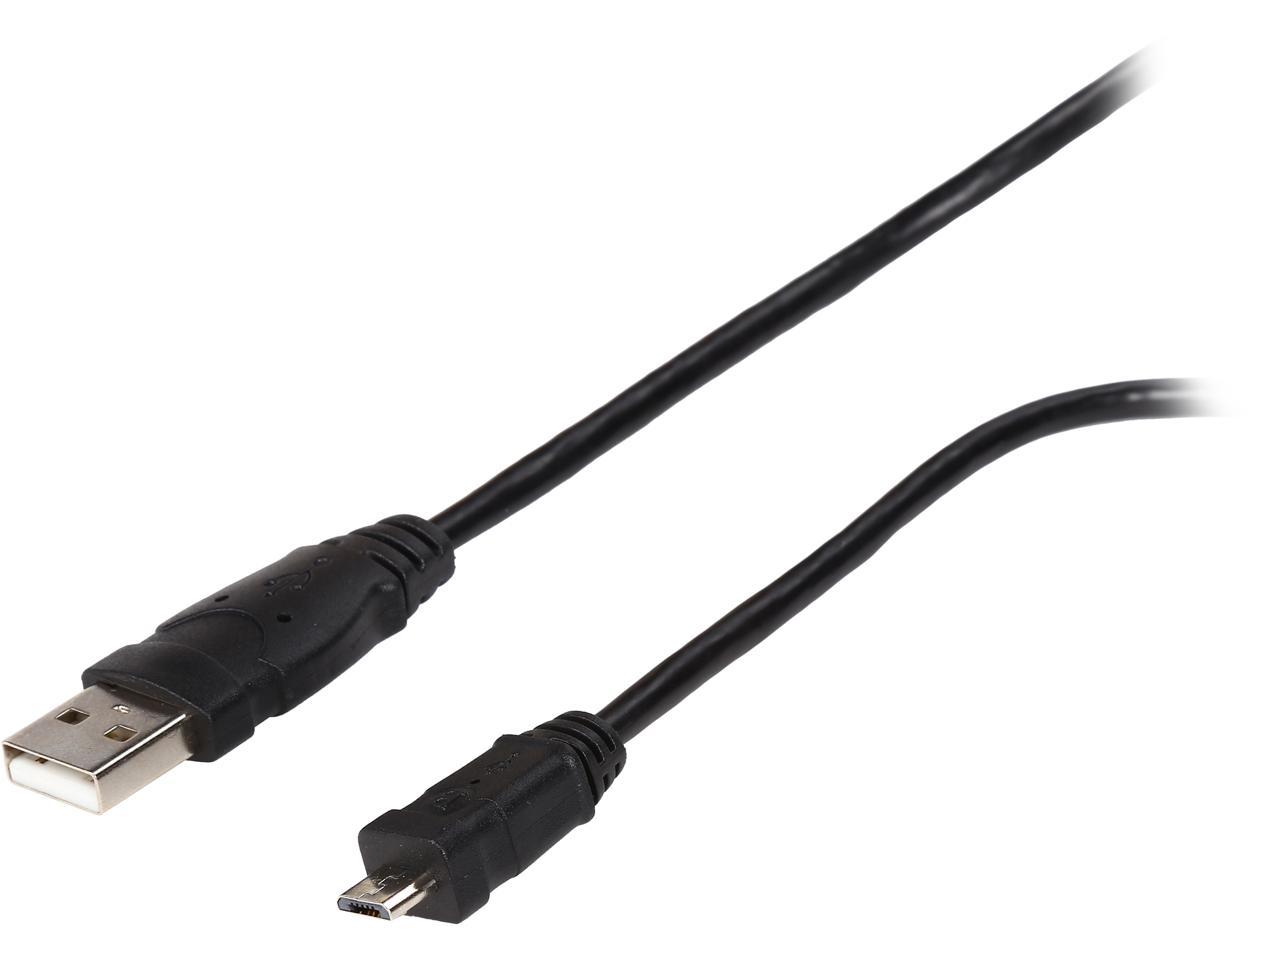 Belkin F3U151B06 Black USB Cable - image 1 of 3